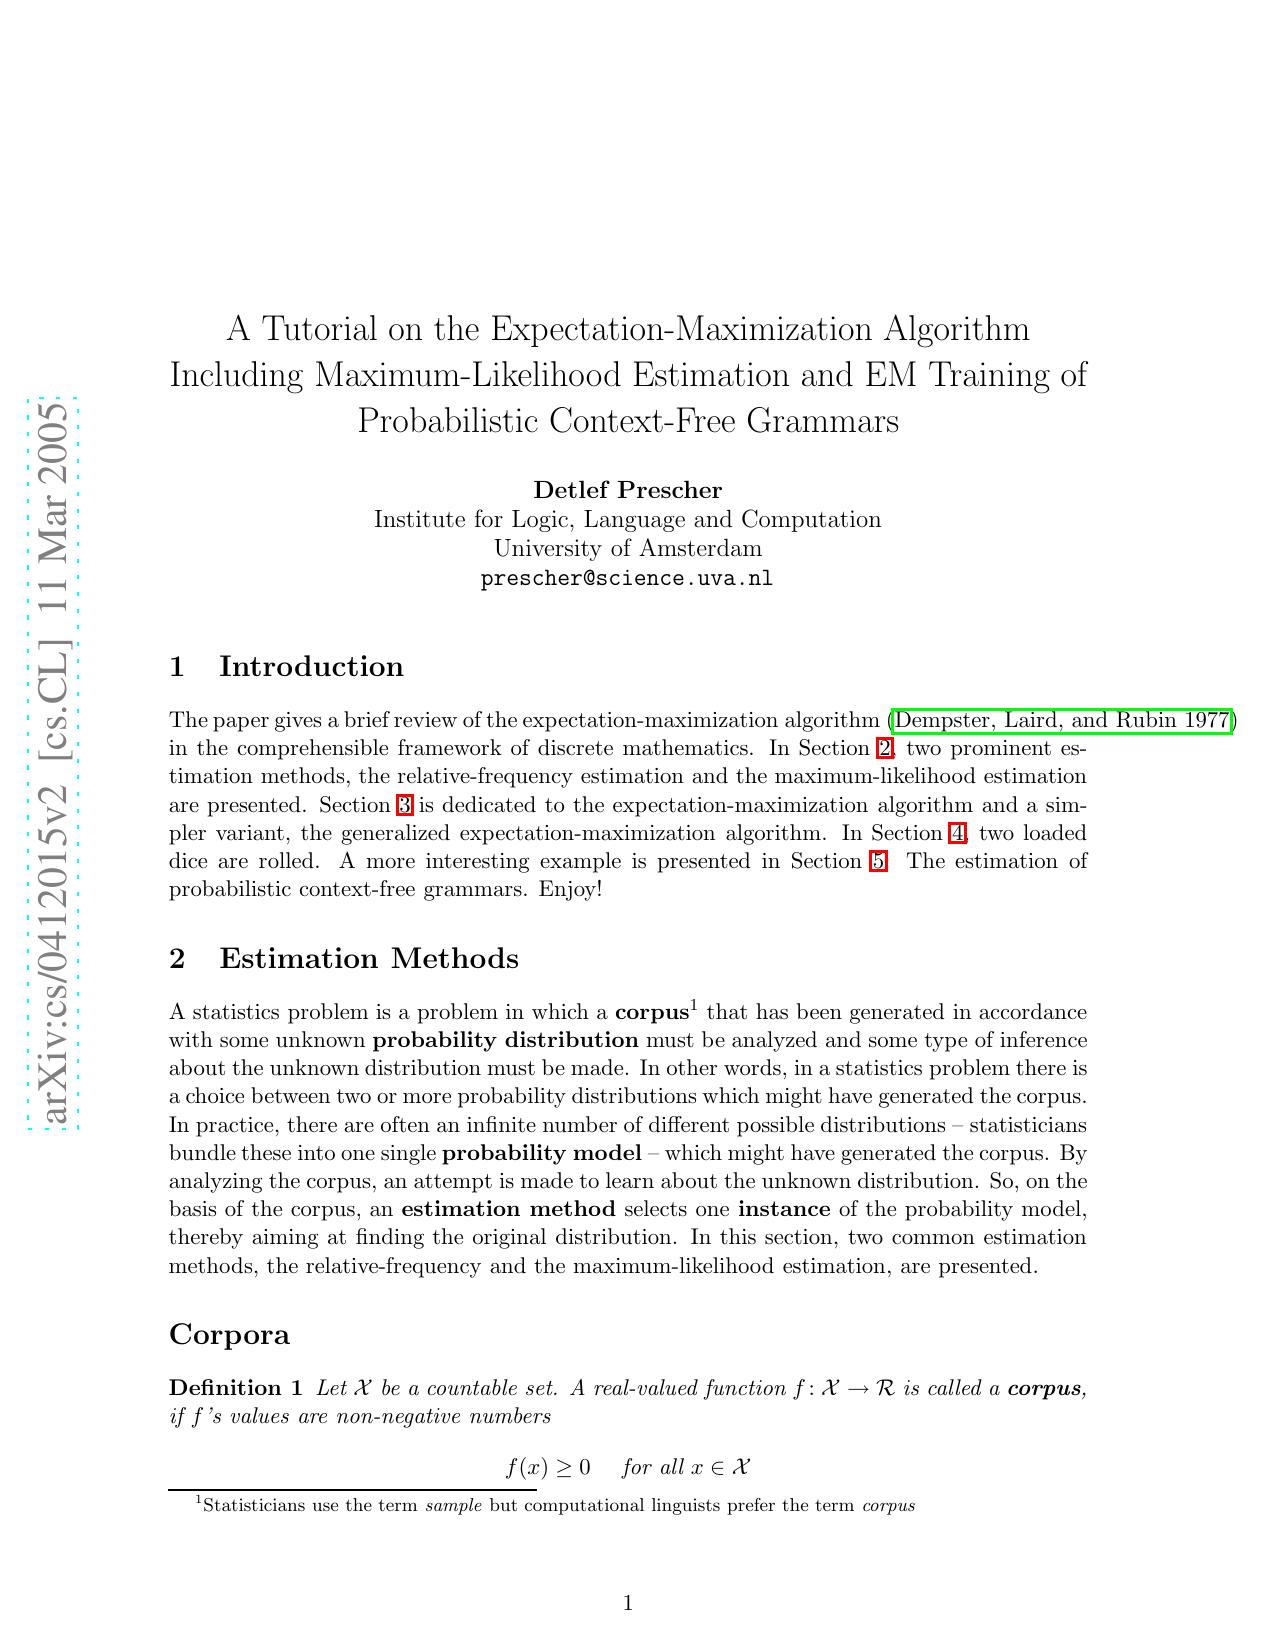 A Tutorial on the Expectation-Maximization Algorithm Including Maximum-Likelihood Estimation and EM Training of Probabilistic Context-Free Grammars - Paper